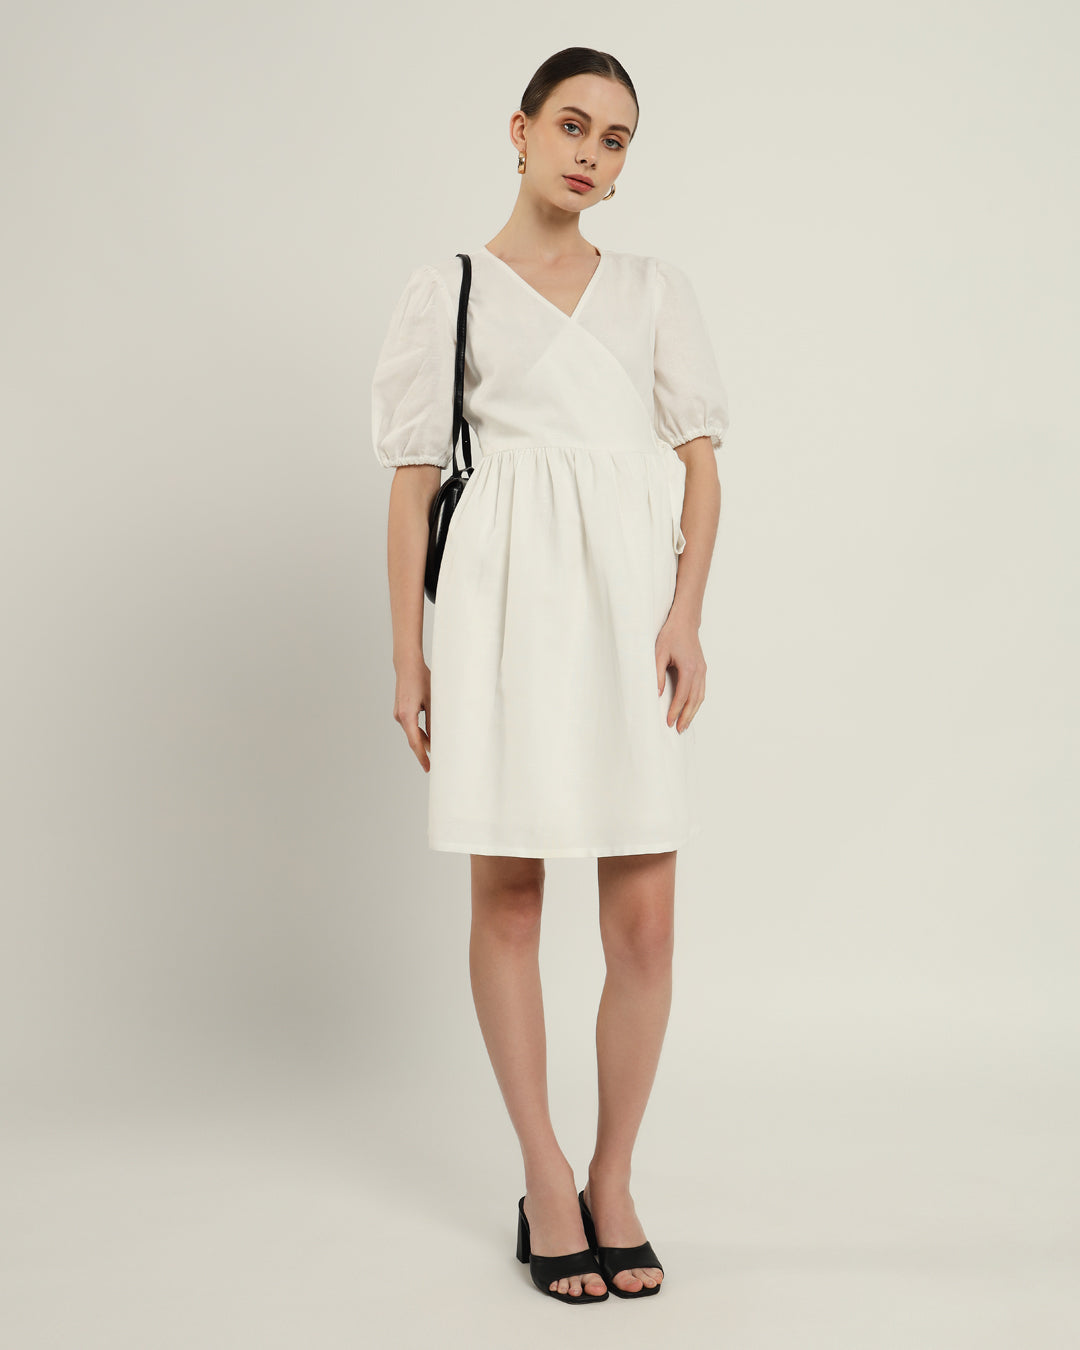 The Inzai Daisy White Linen Dress